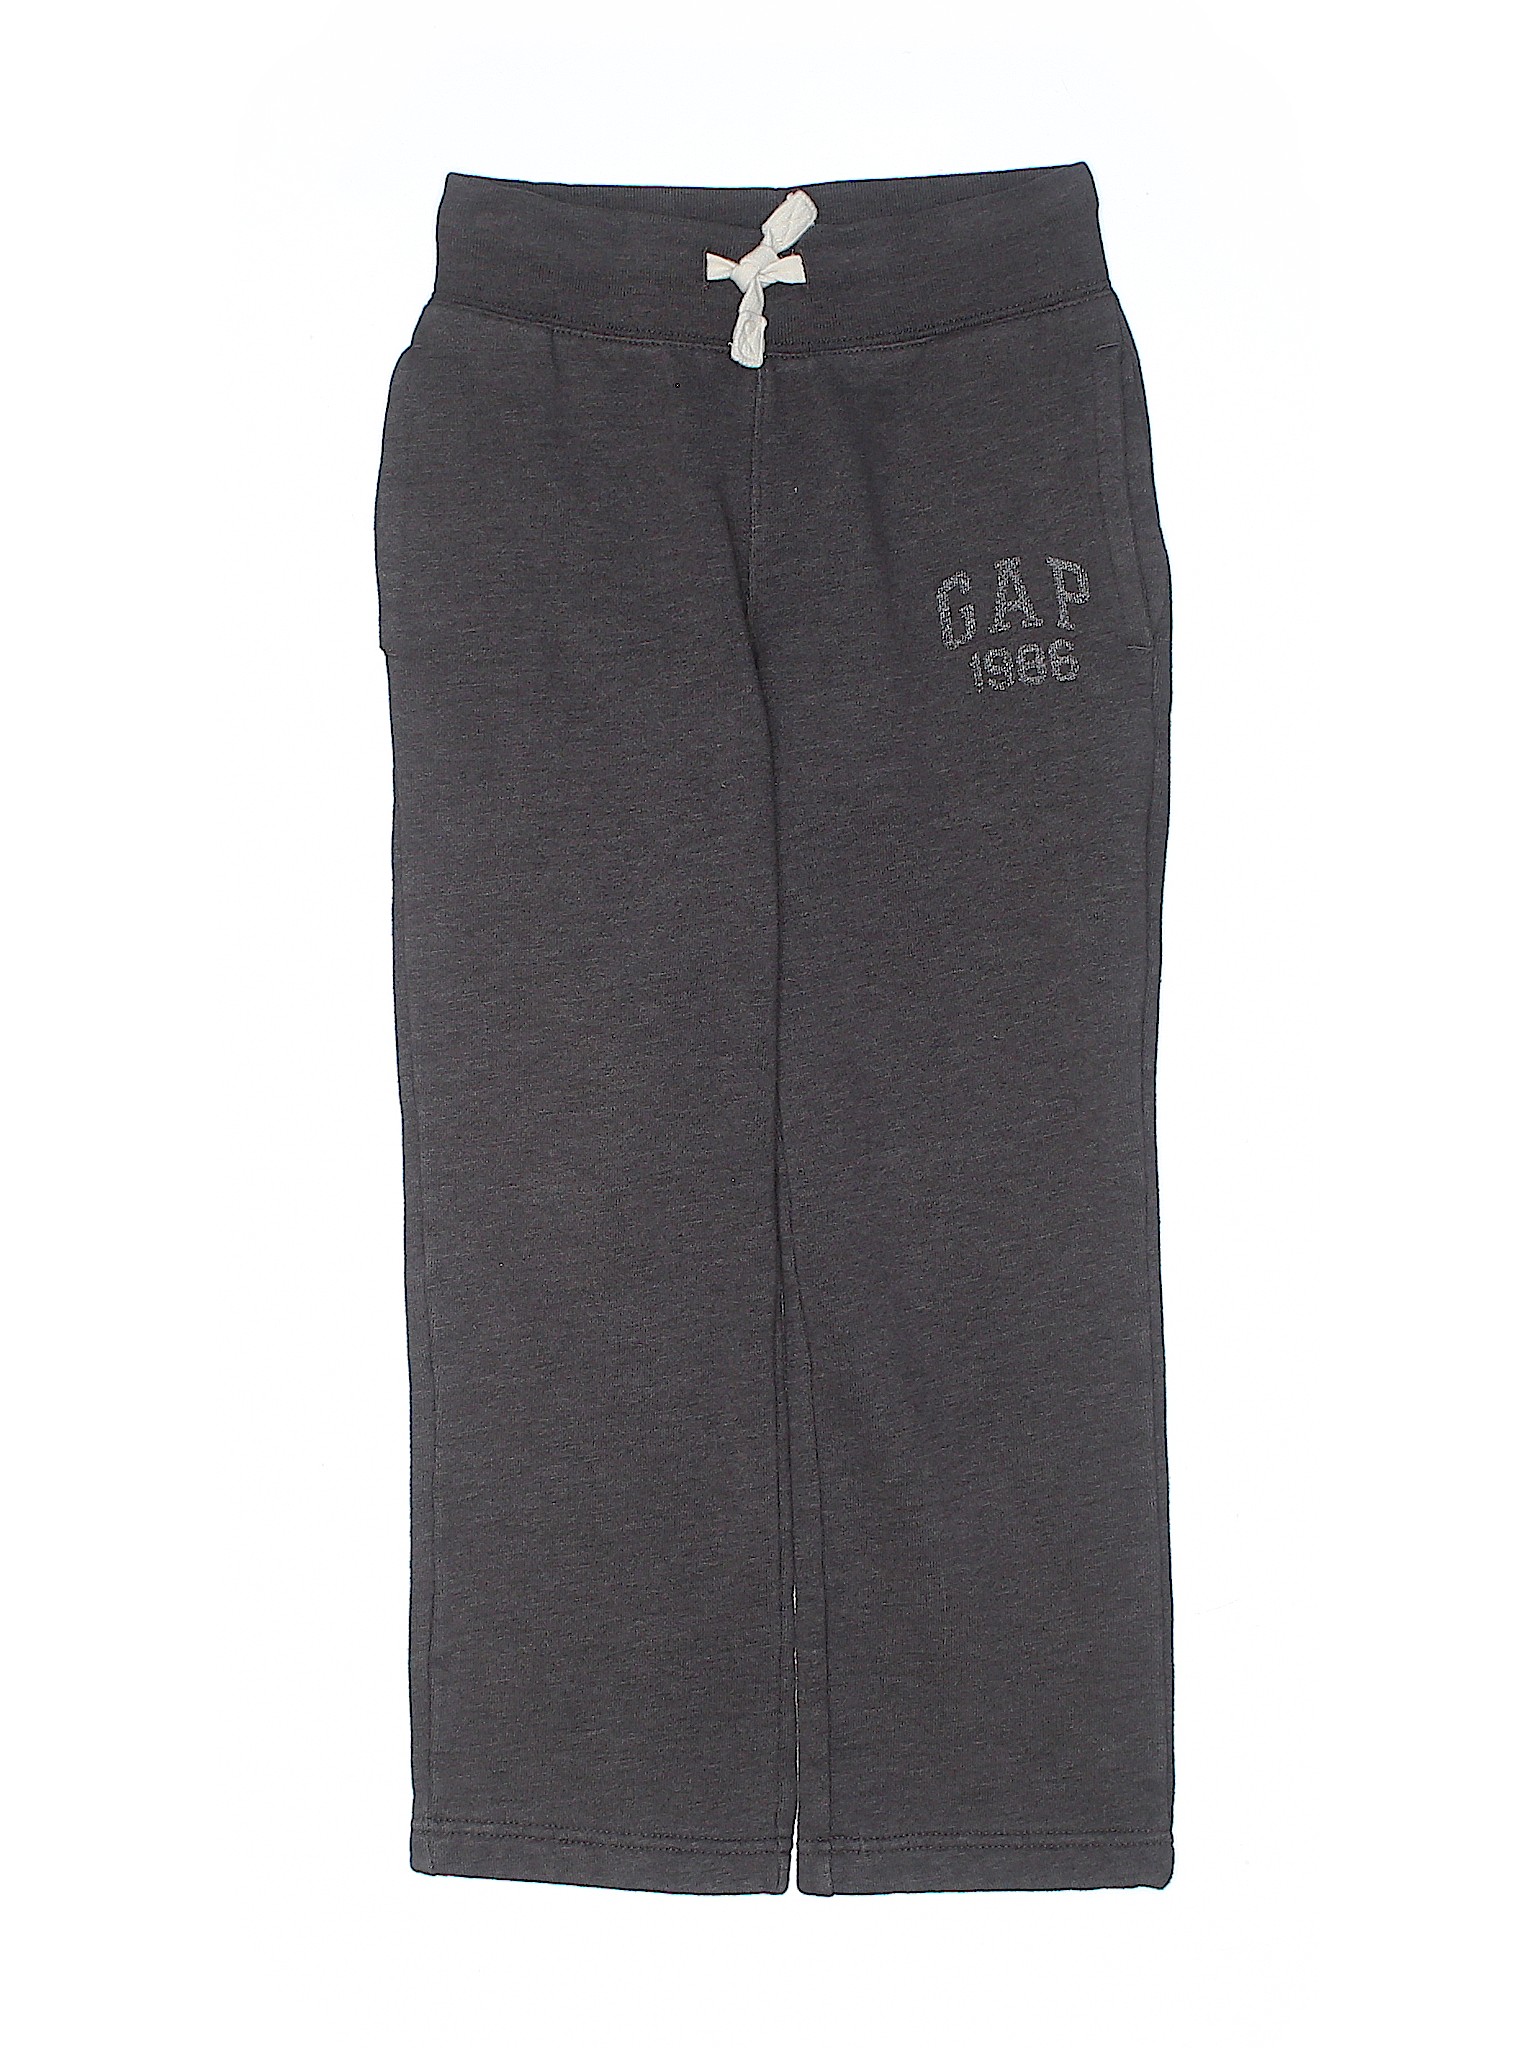 Gap Kids Outlet Girls Gray Sweatpants S 